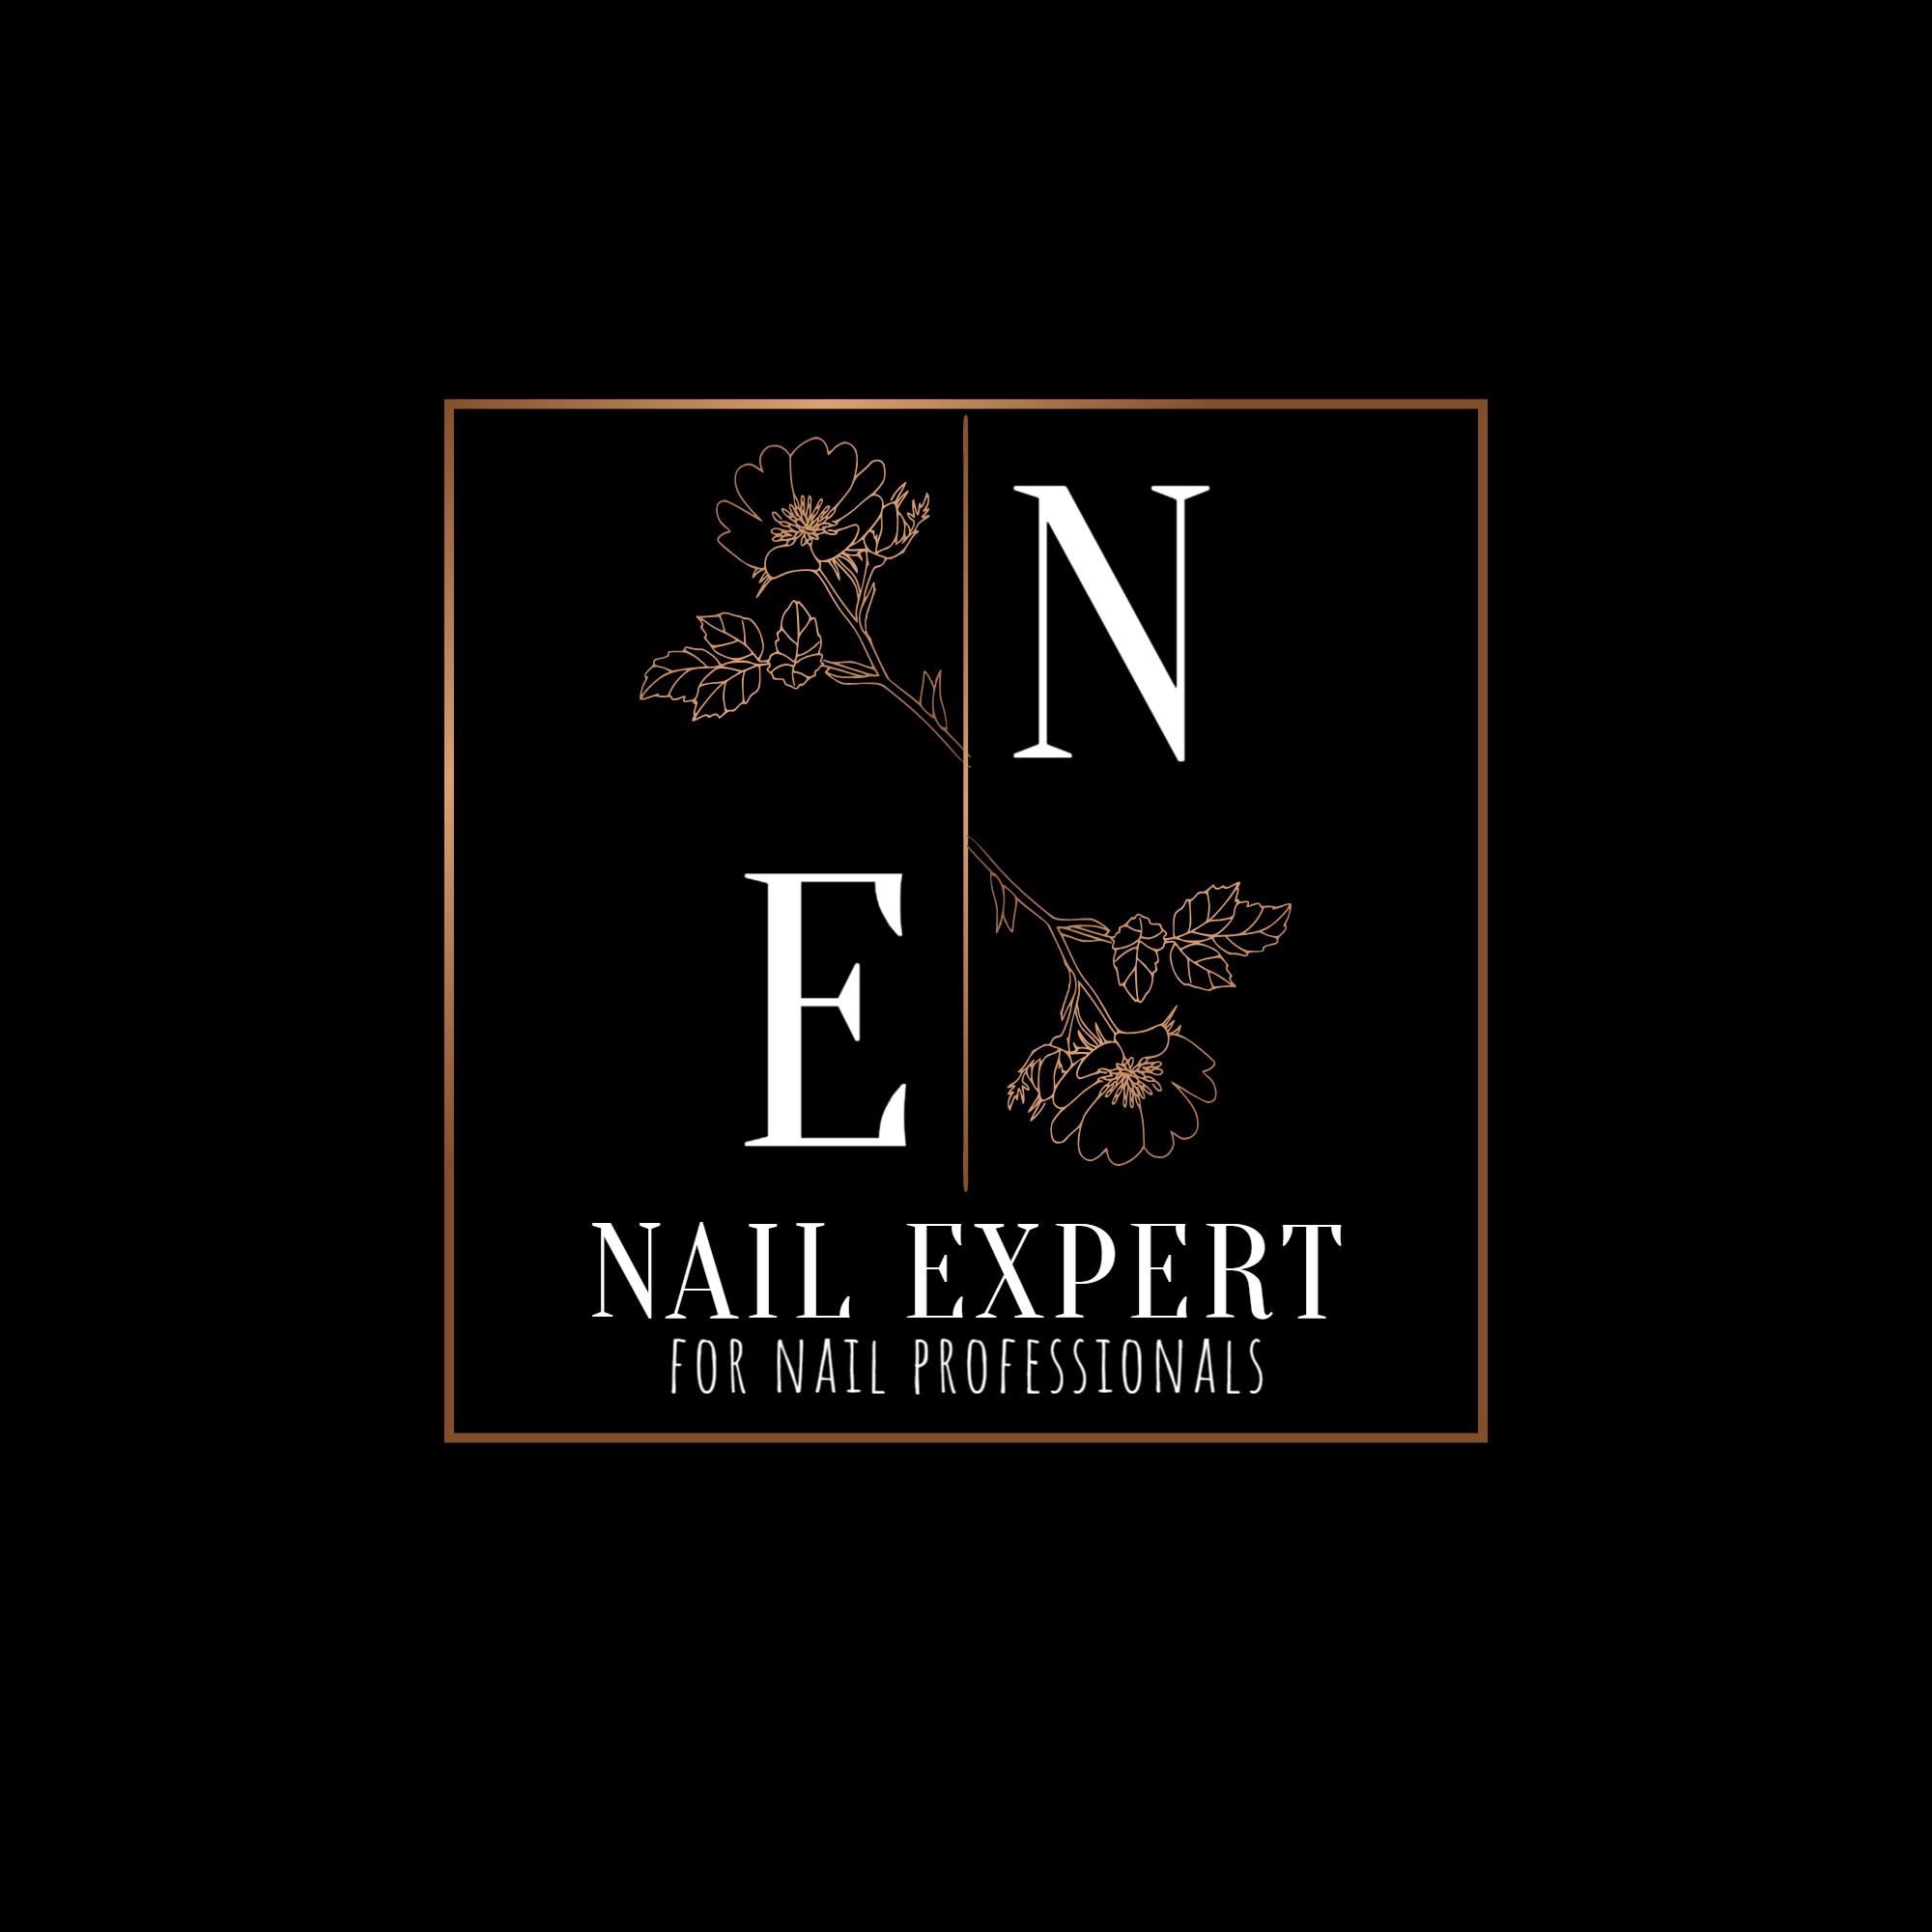 Nail Expert for Nail Professionals